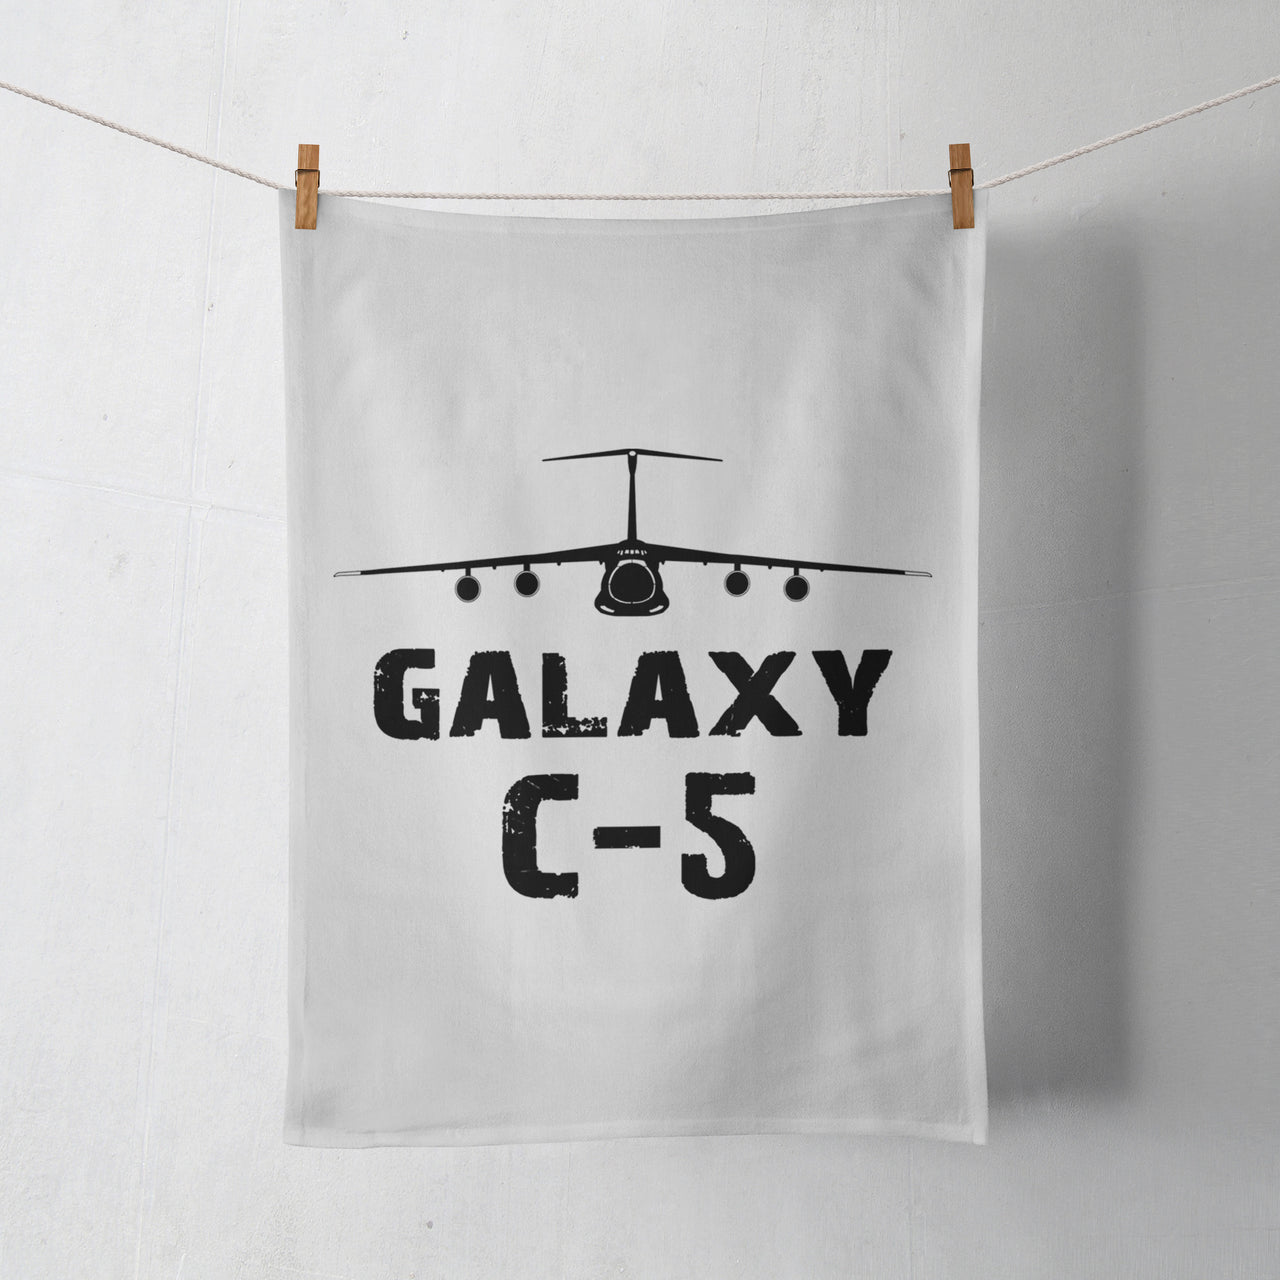 Galaxy C-5 & Plane Designed Towels